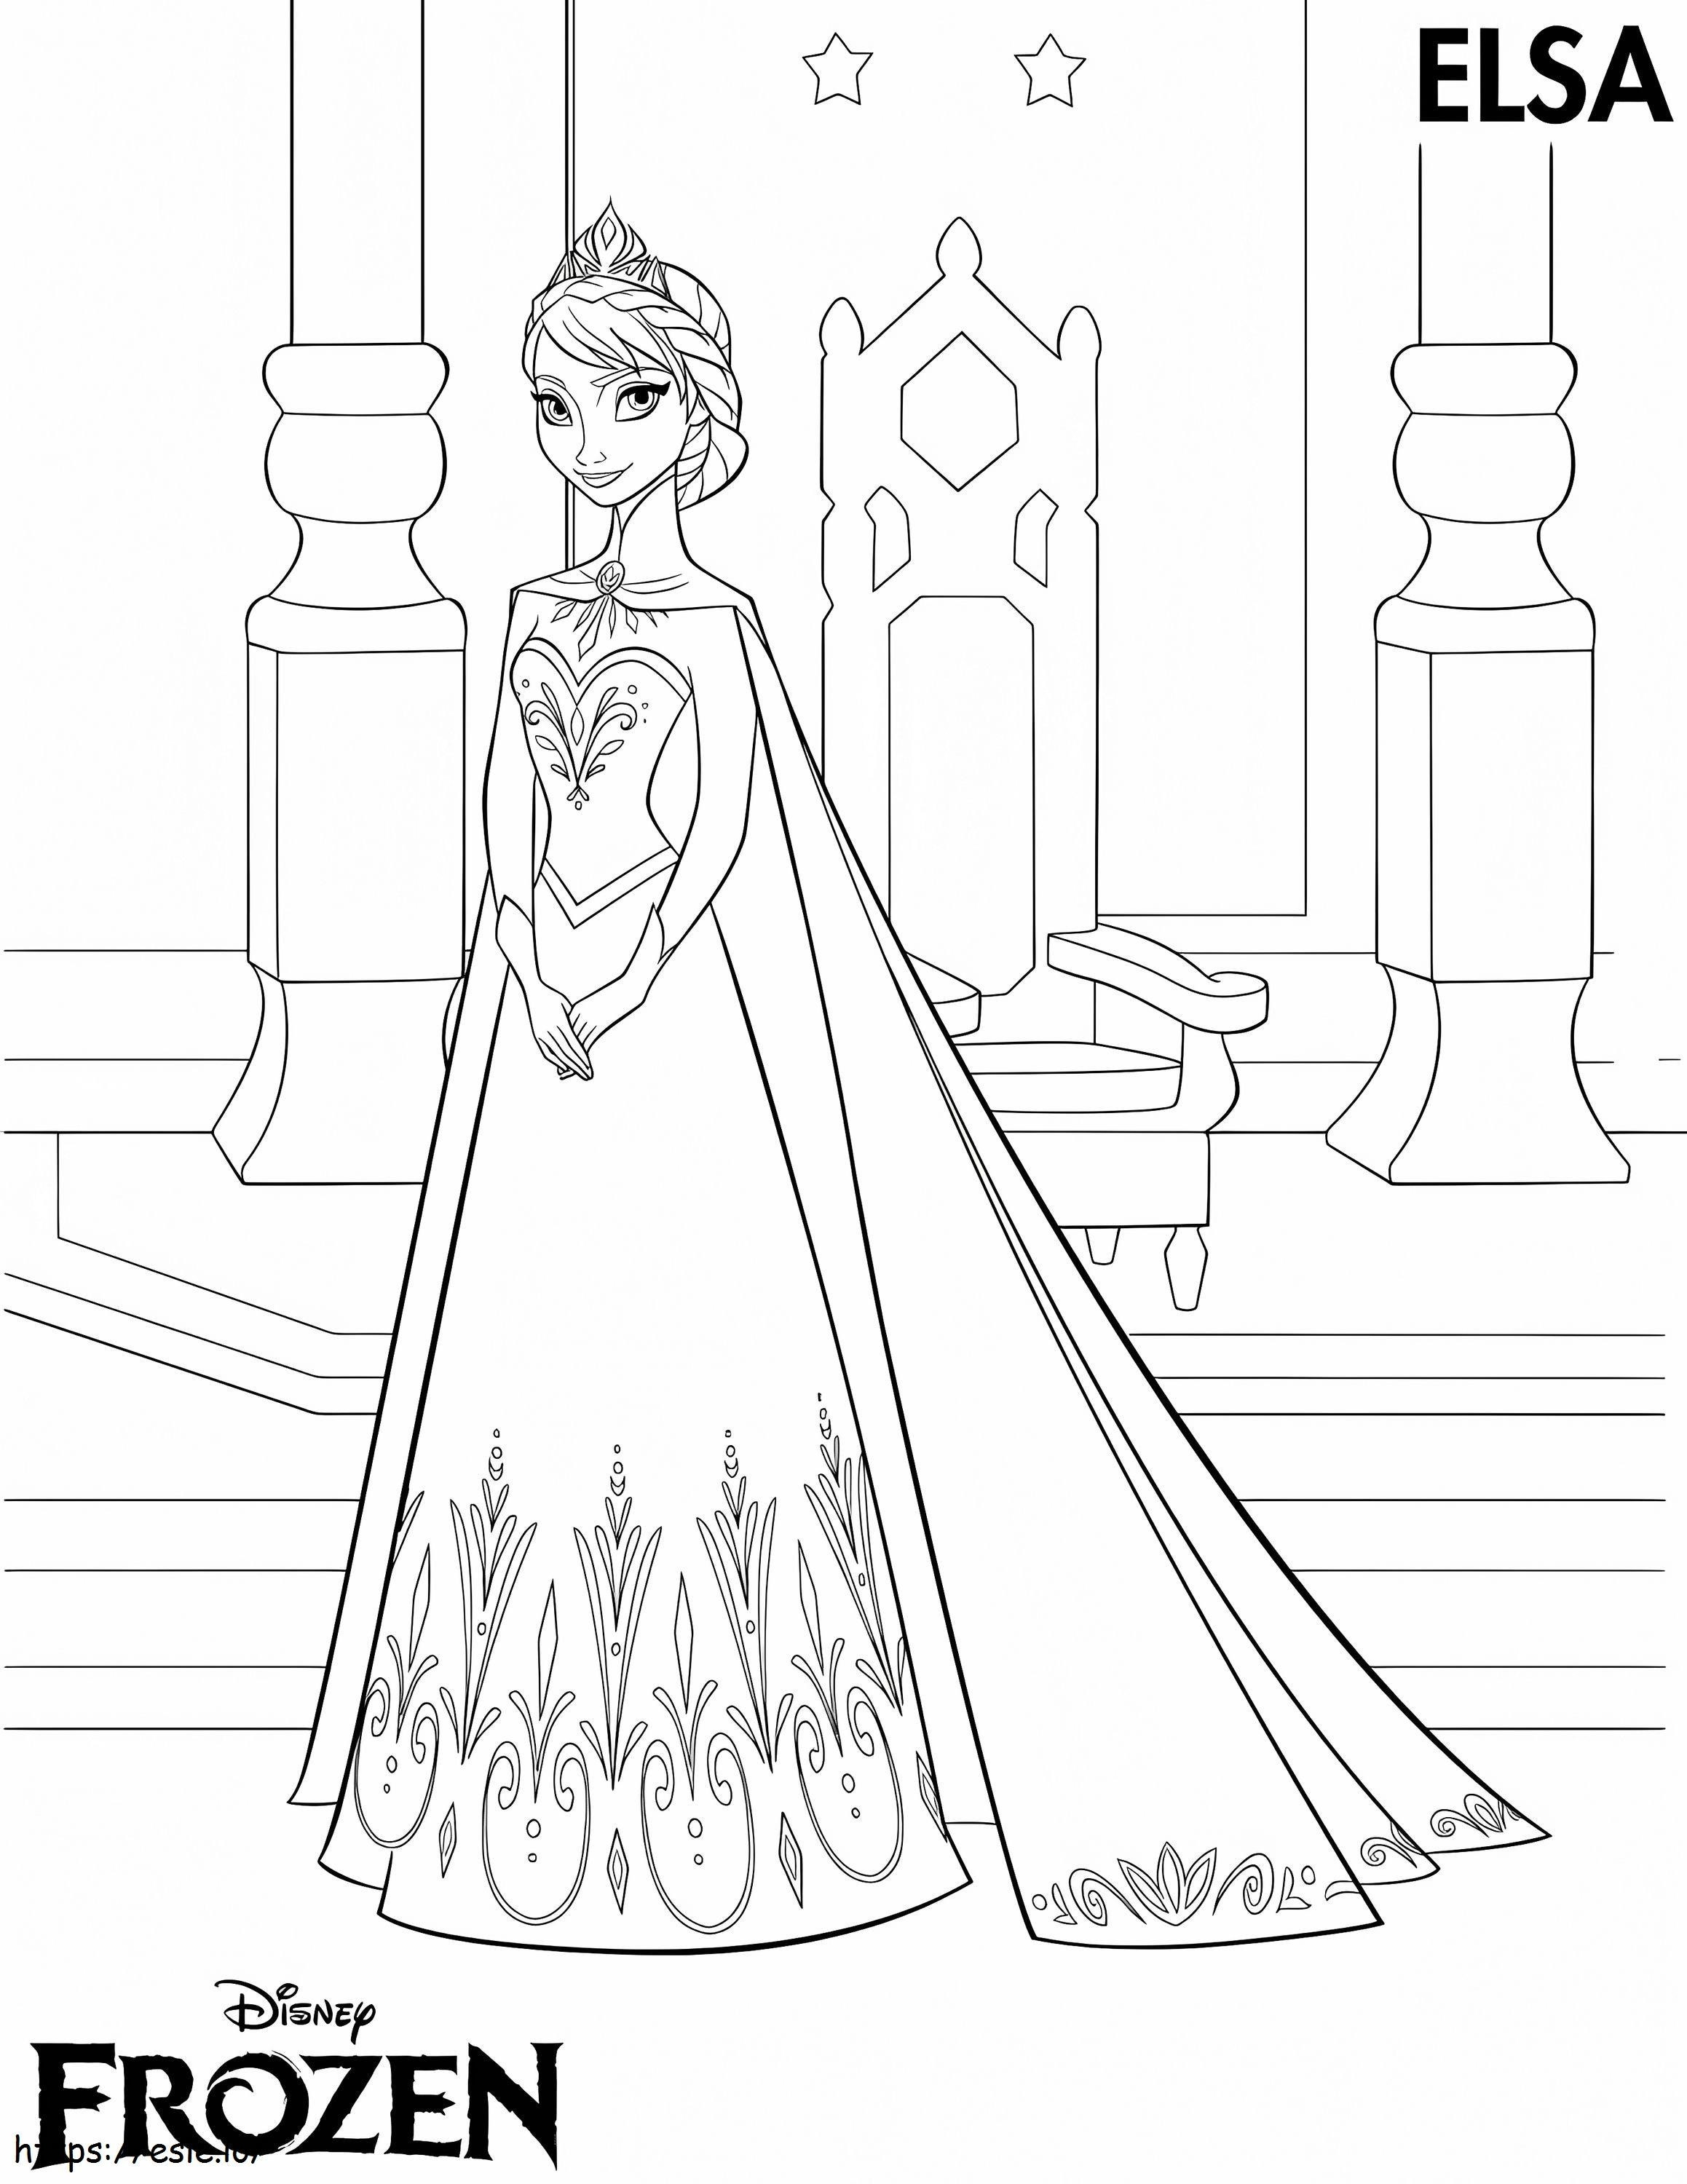 Elsa Coronation coloring page